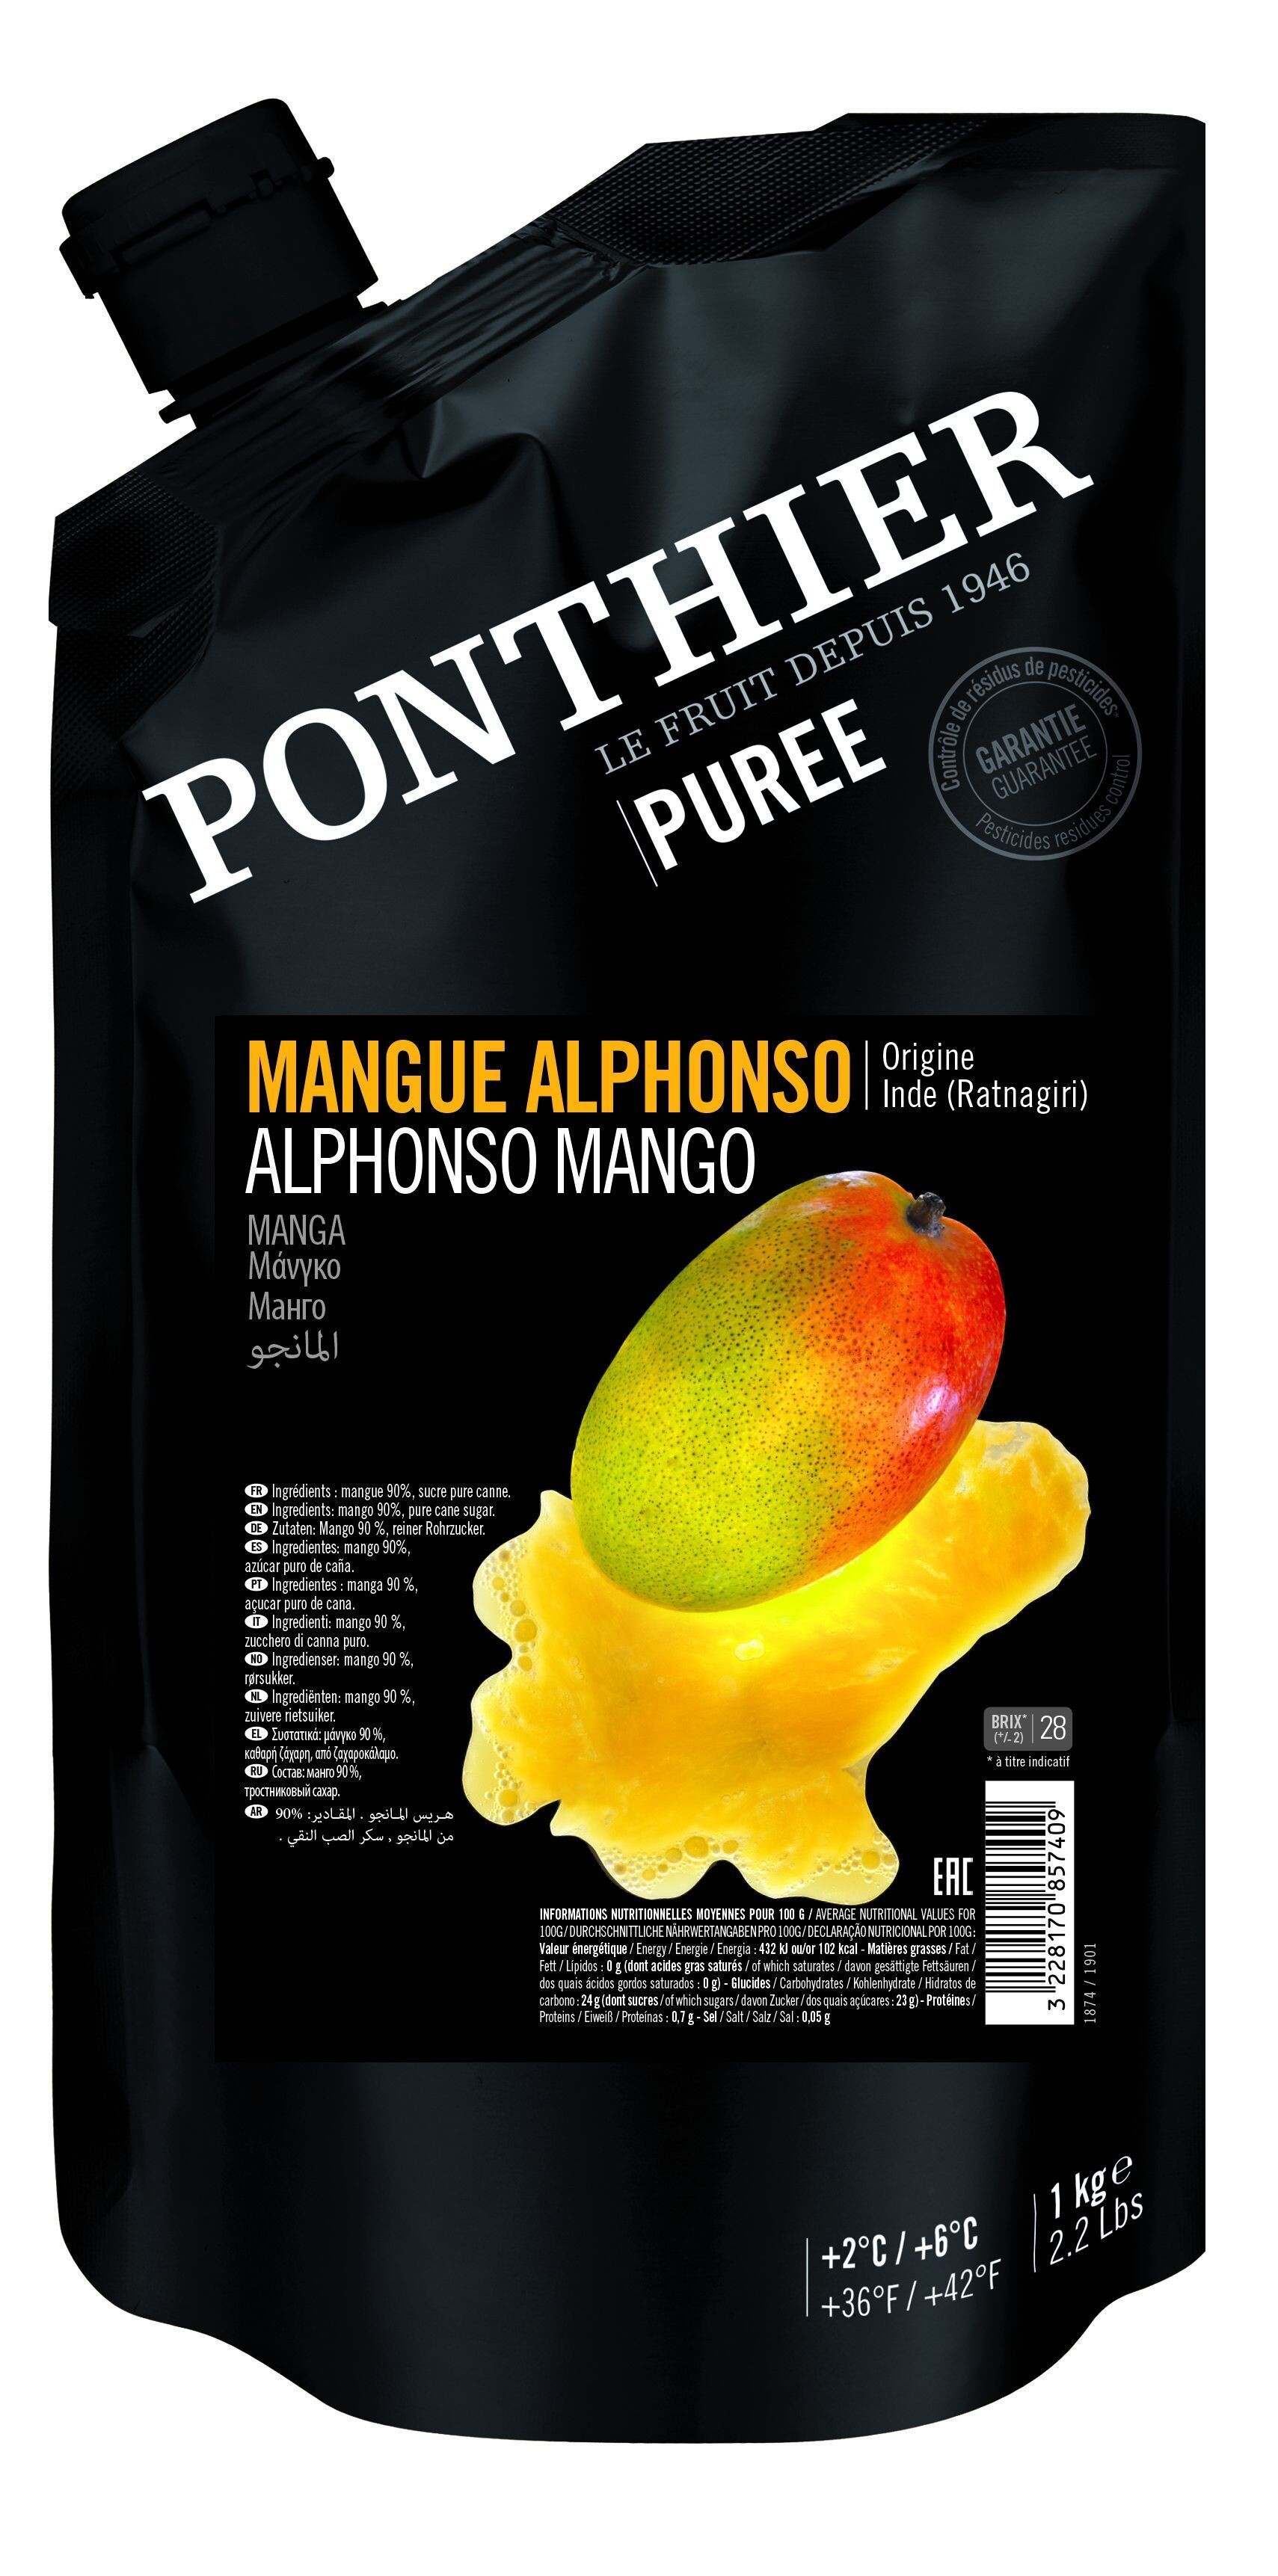 Ponthier Fruit Puree Mango Alphonso 1kg